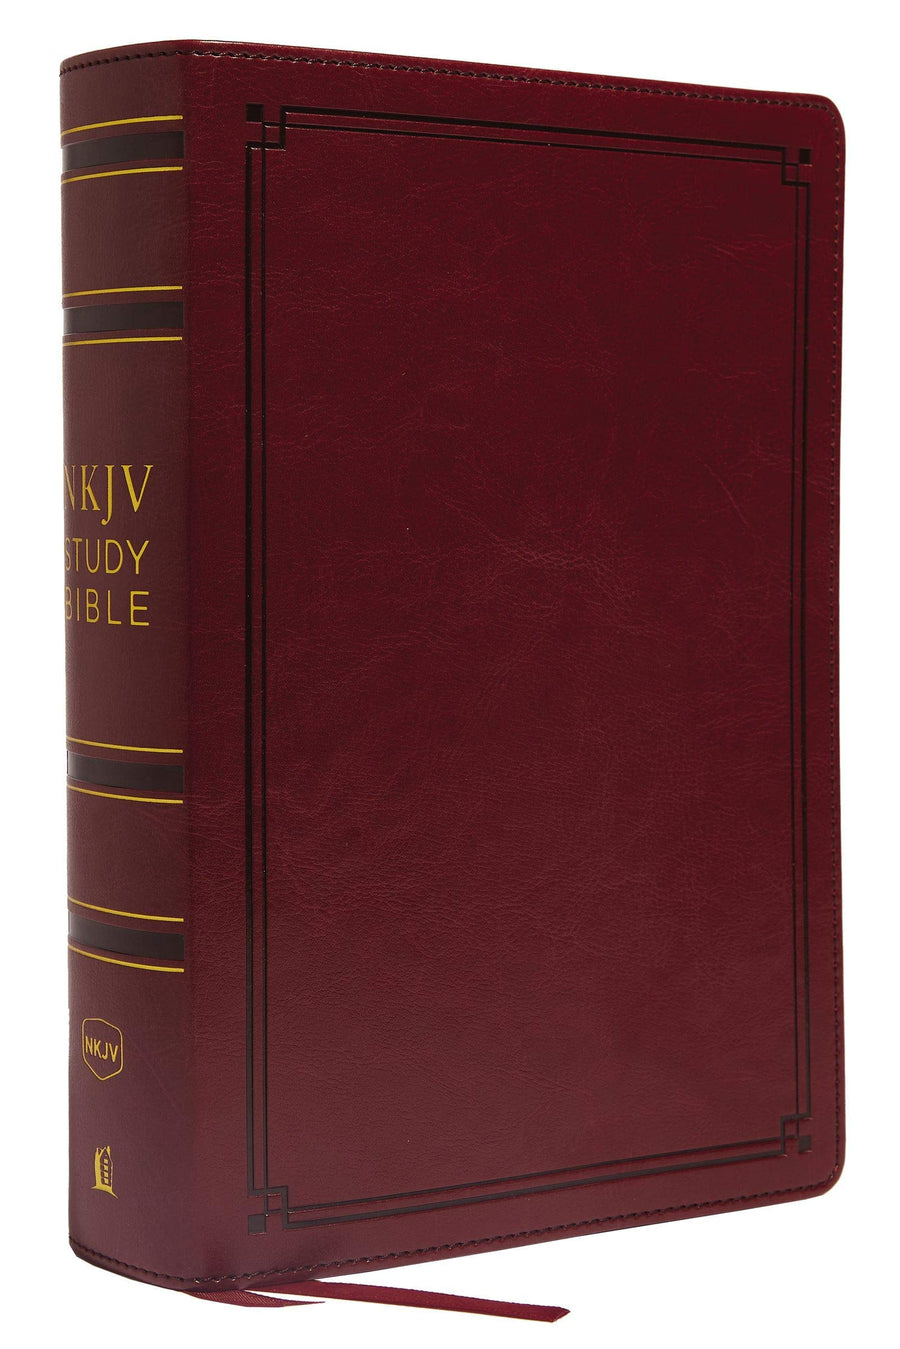 Personalized NKJV Study Bible Leathersoft Red